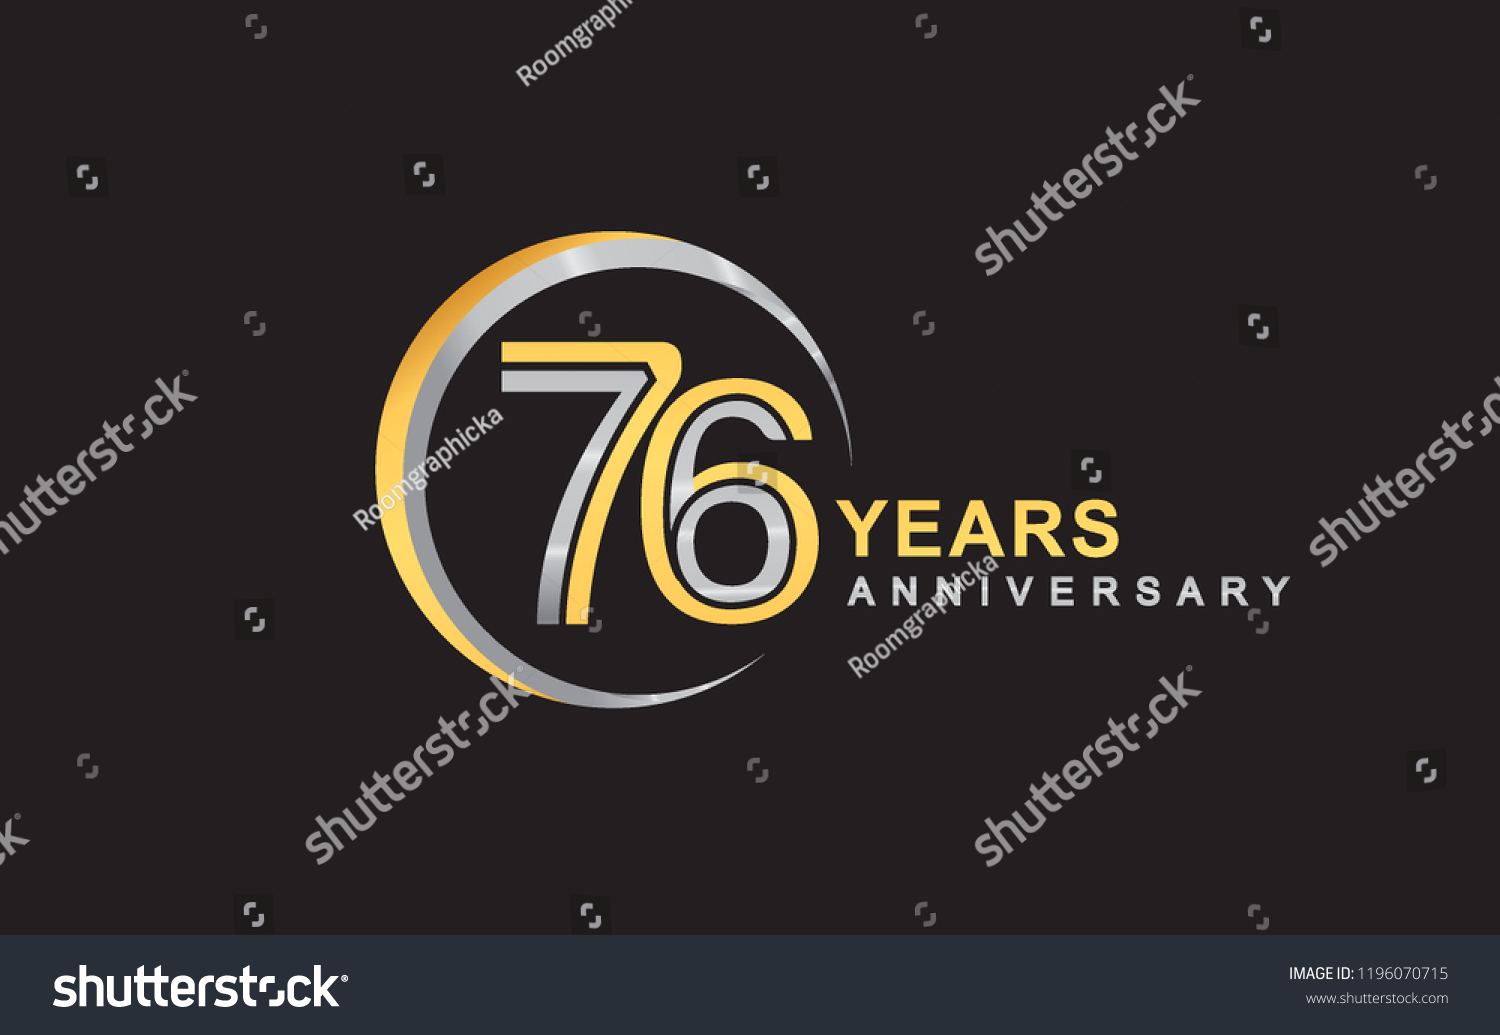 2,458 76th Anniversary Celebration Images, Stock Photos & Vectors ...